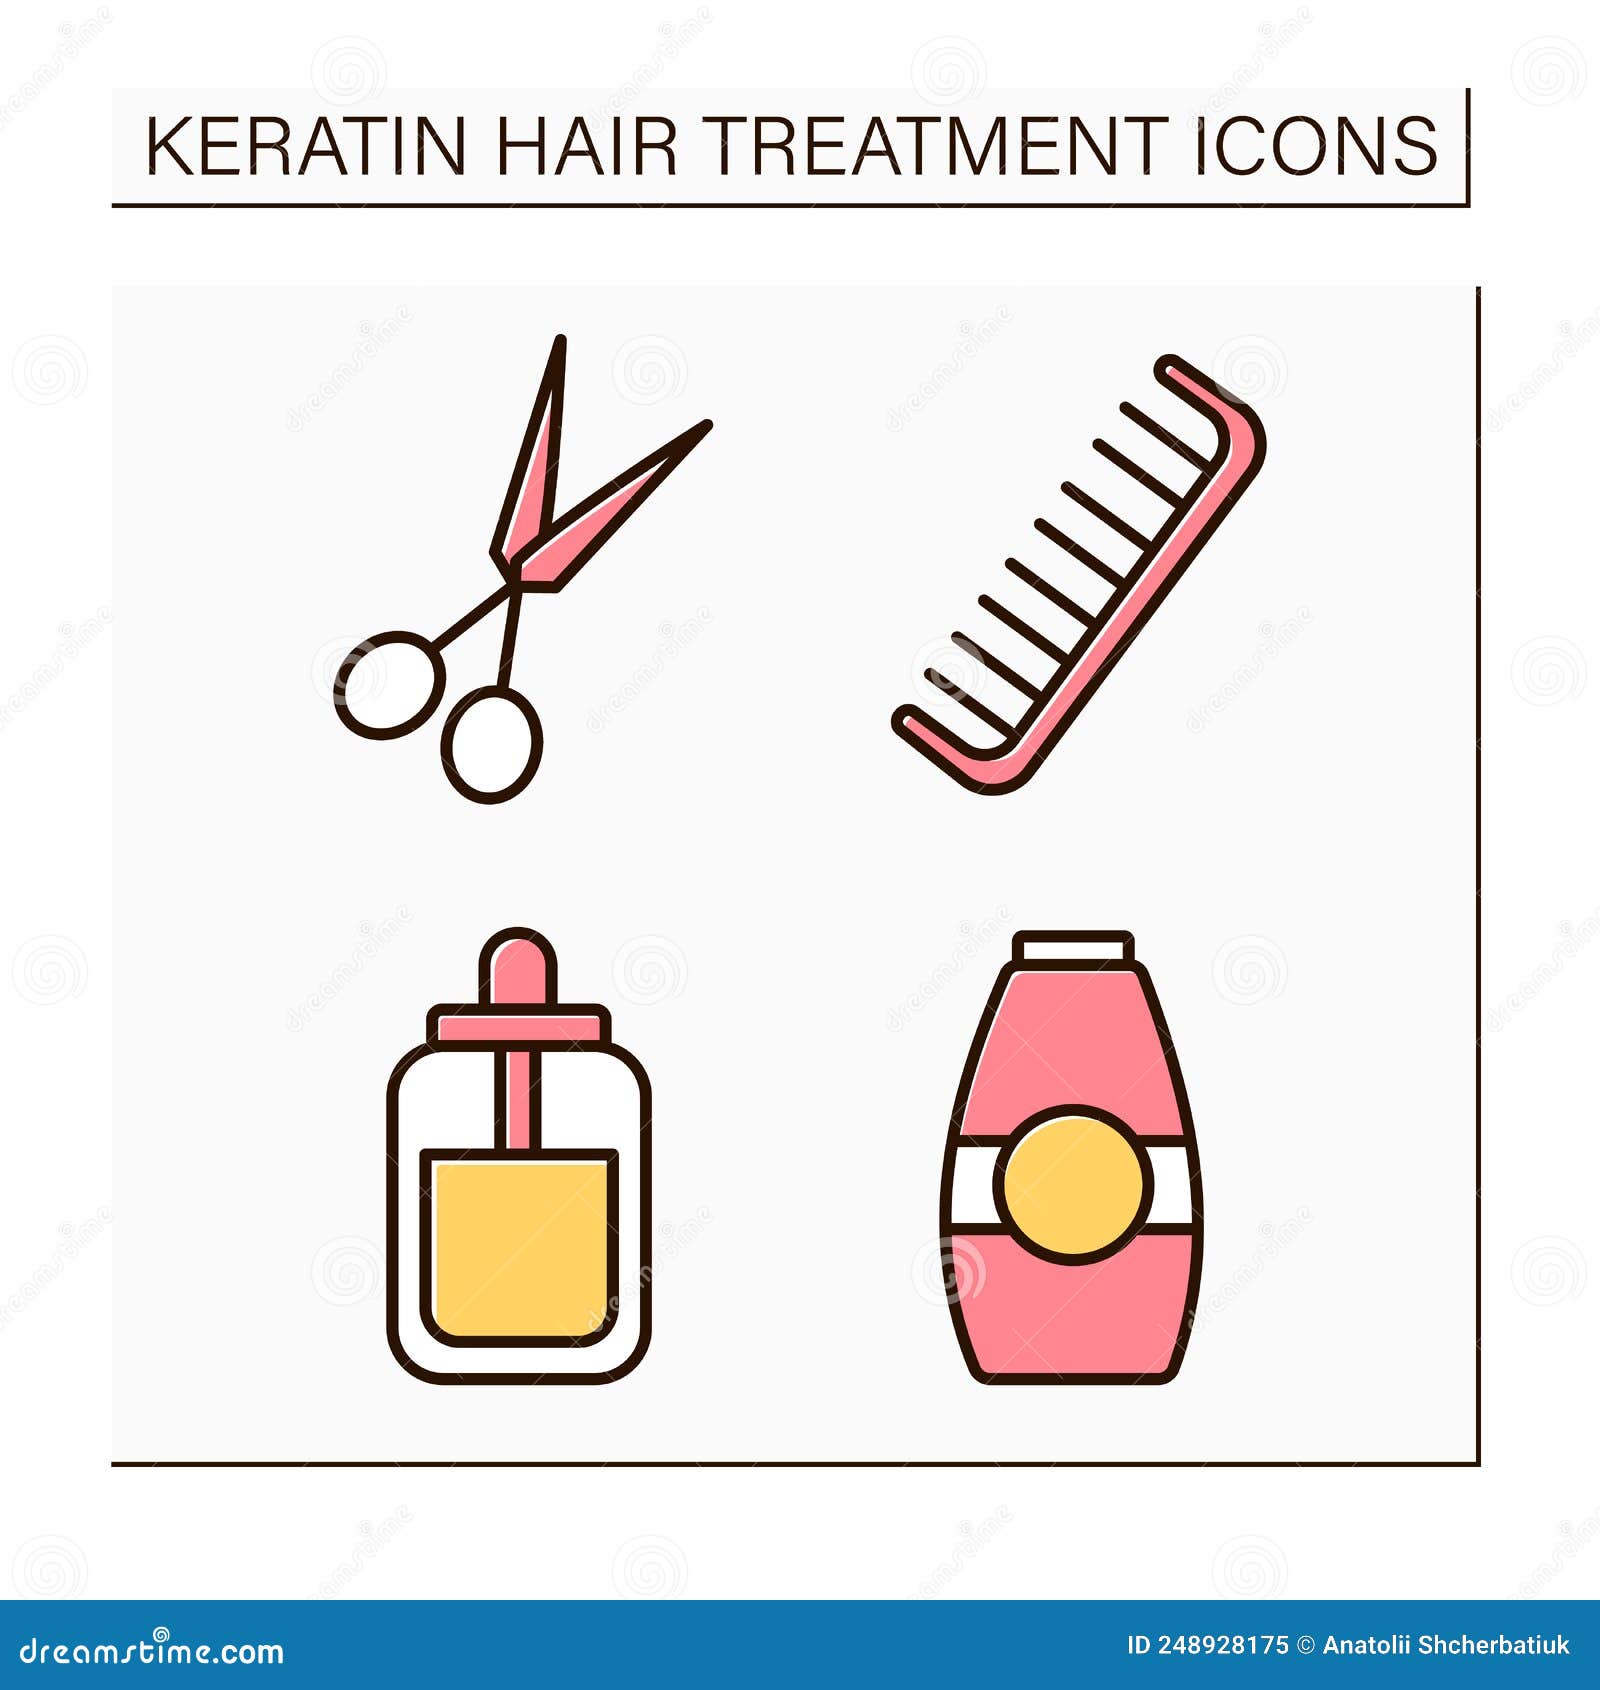 Keratin Hair Procedure Neon Glow Icon Illustration | CartoonDealer.com ...